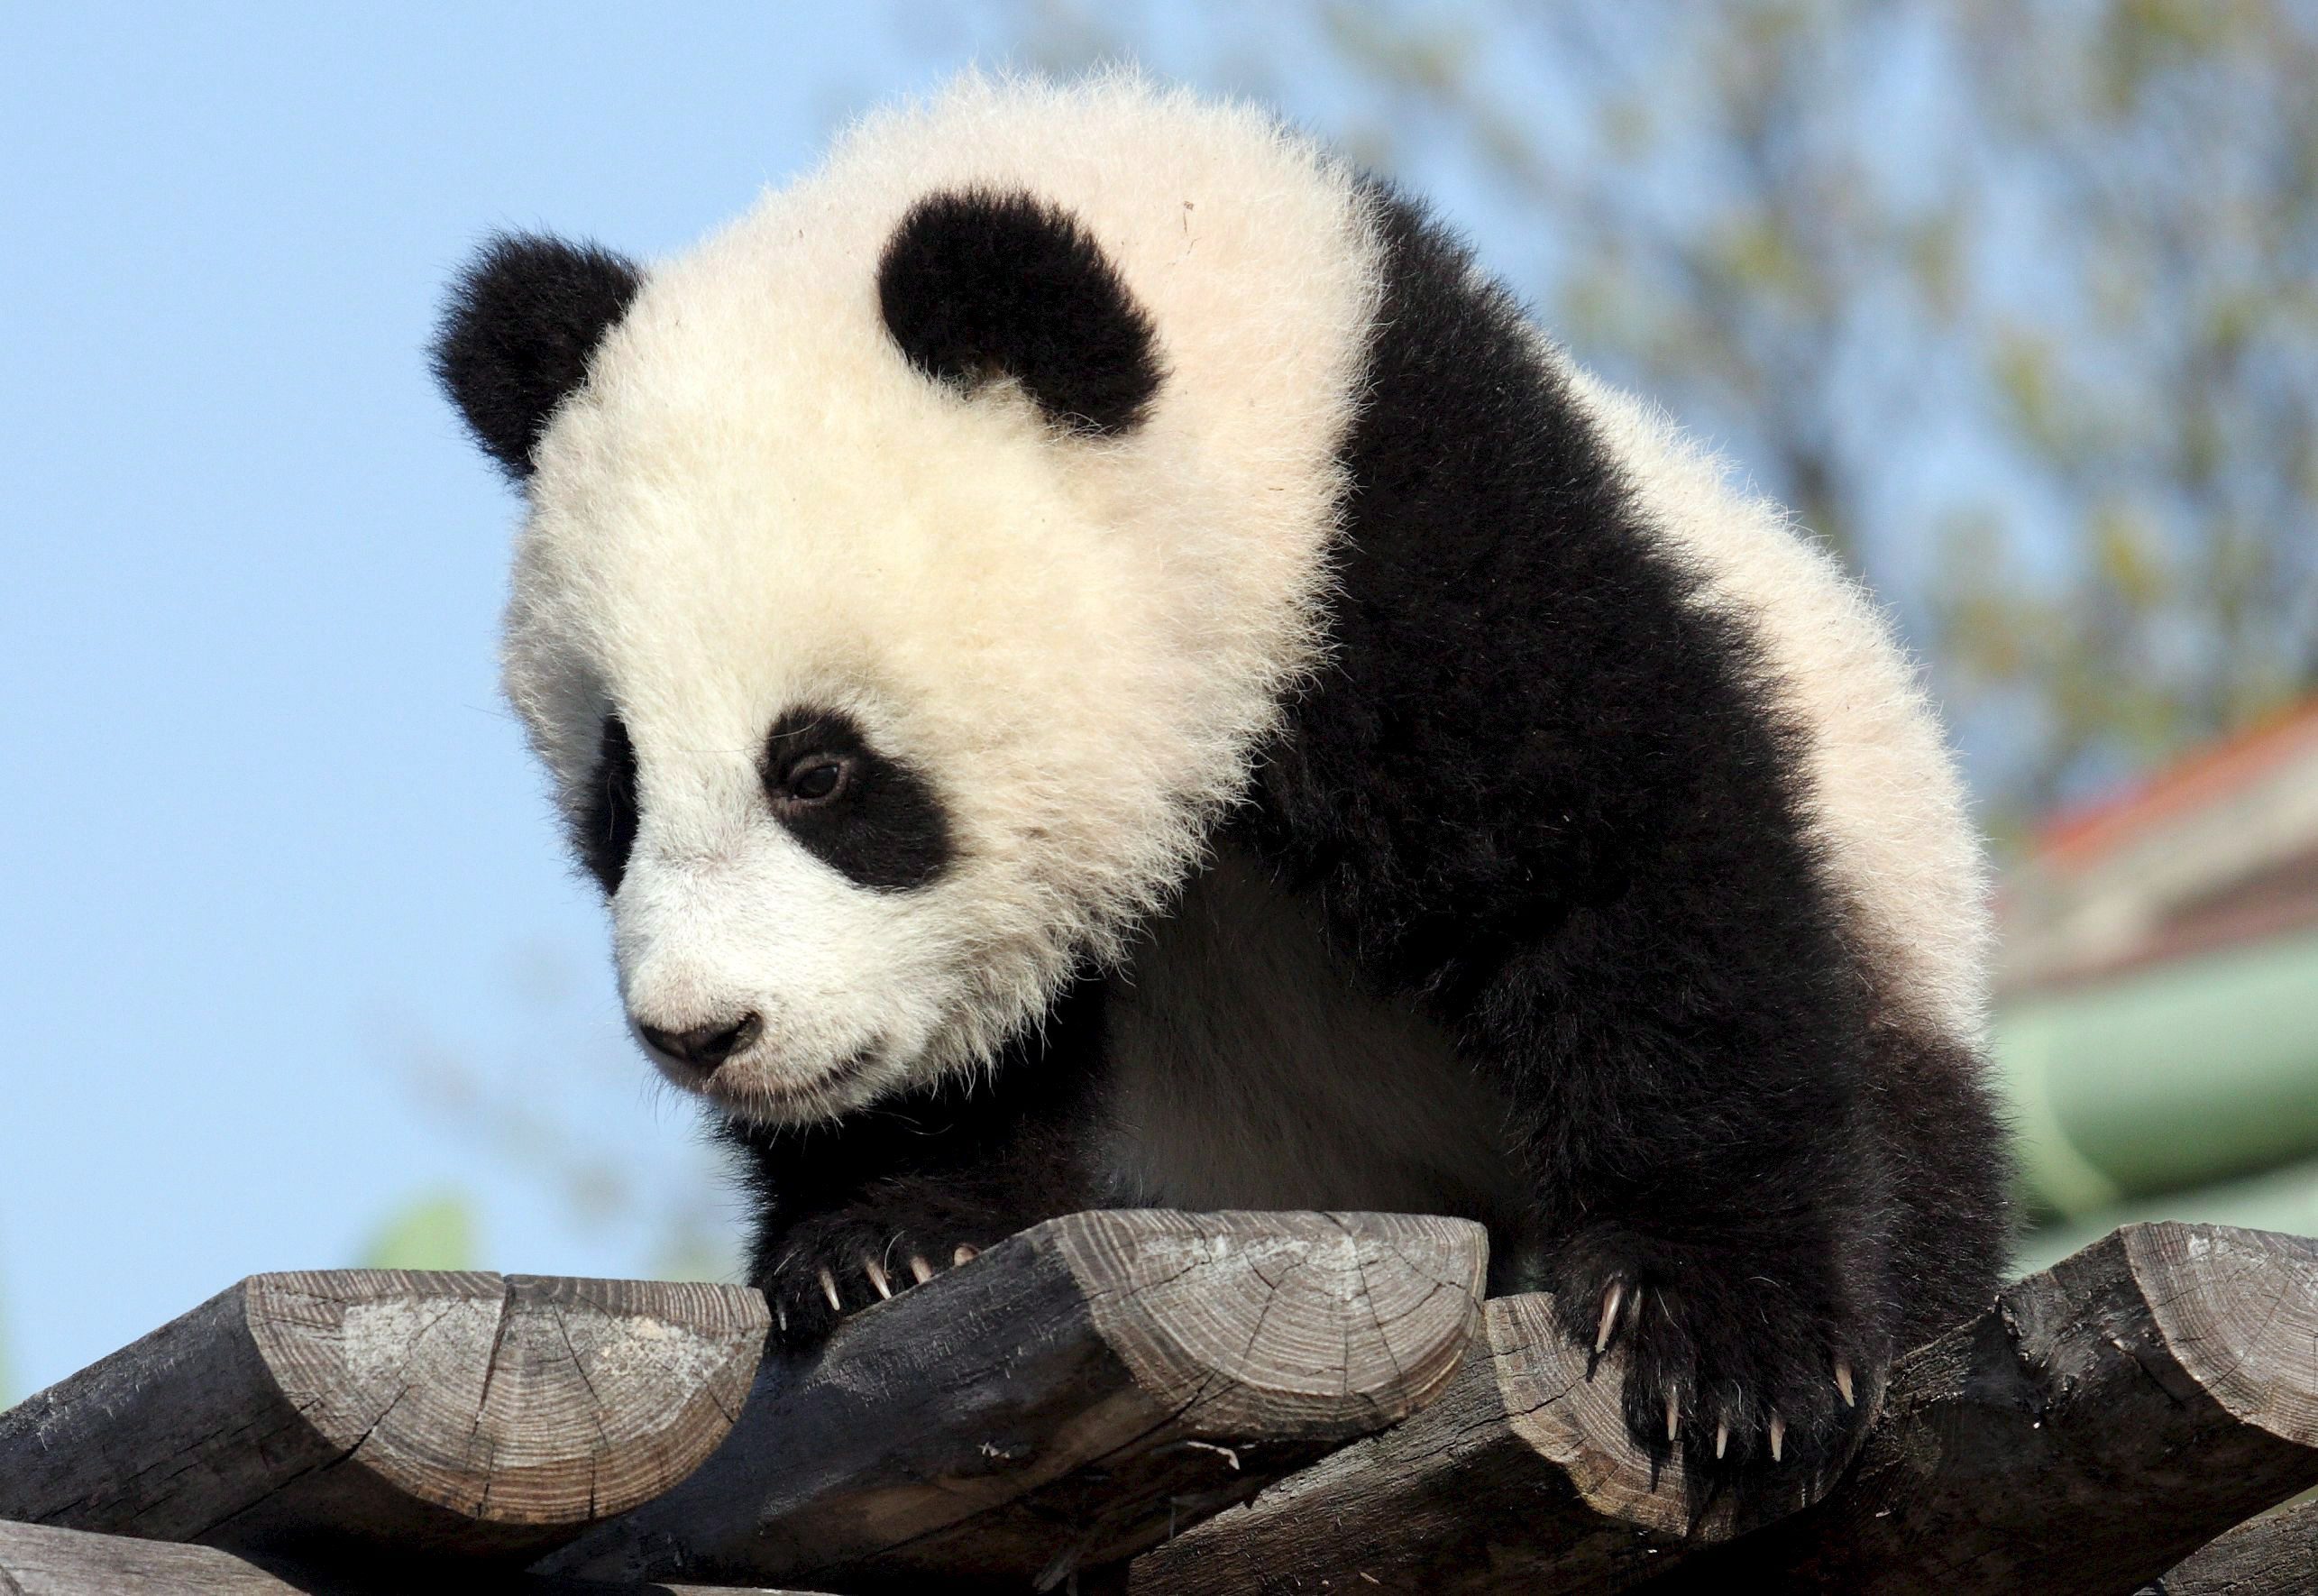 Панда без кругов. Панда без черных кругов. Циньлинская Панда. Панда в профиль. Пандик.